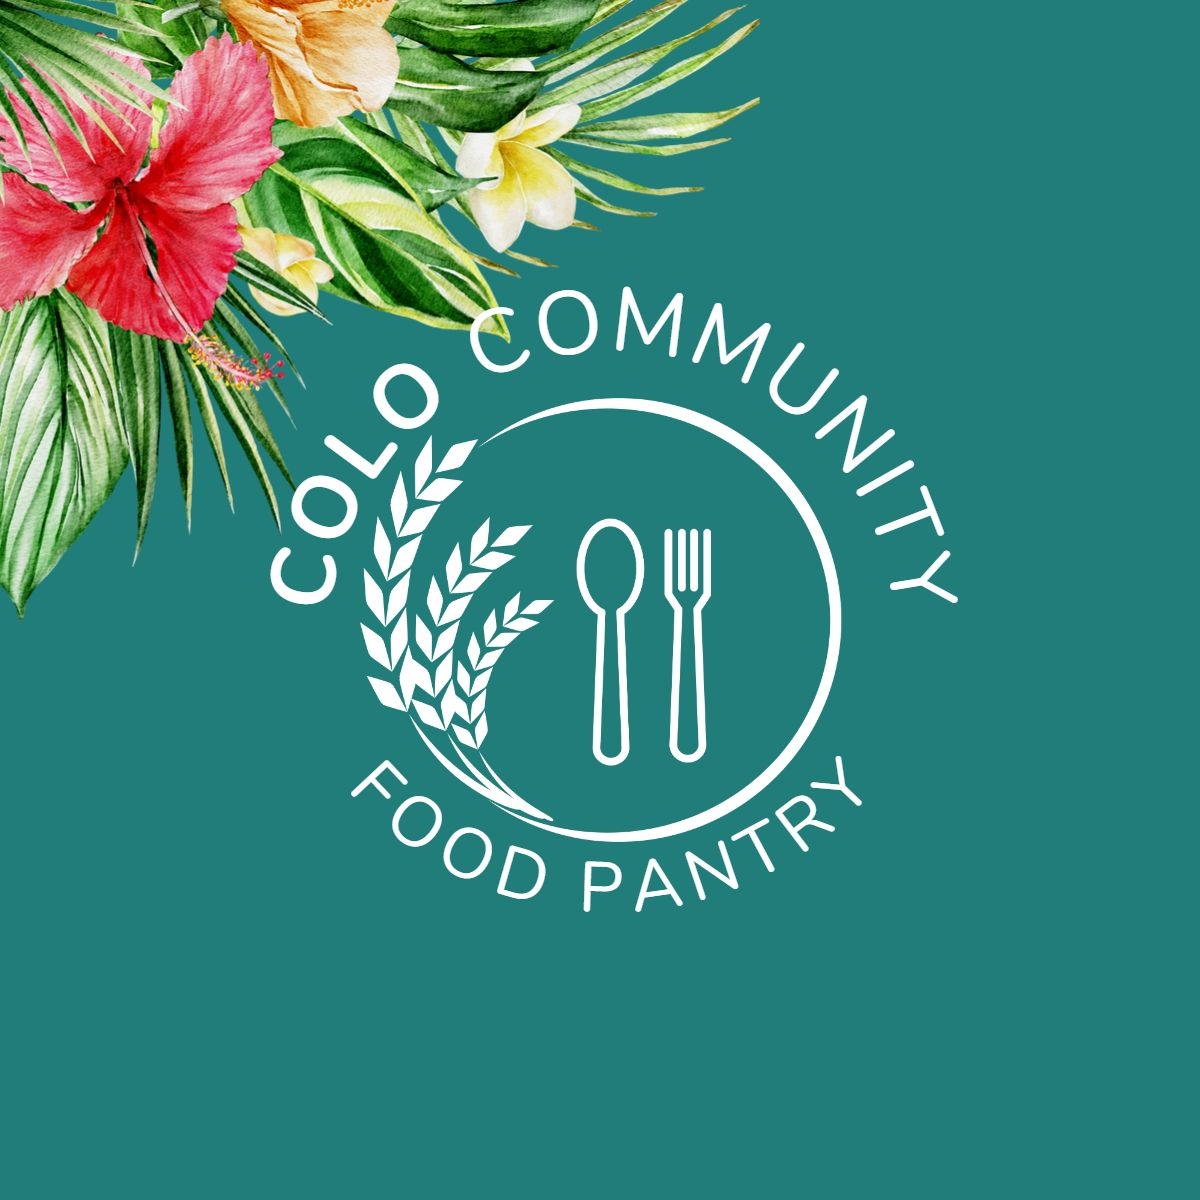 Colo Community Food Pantry logo